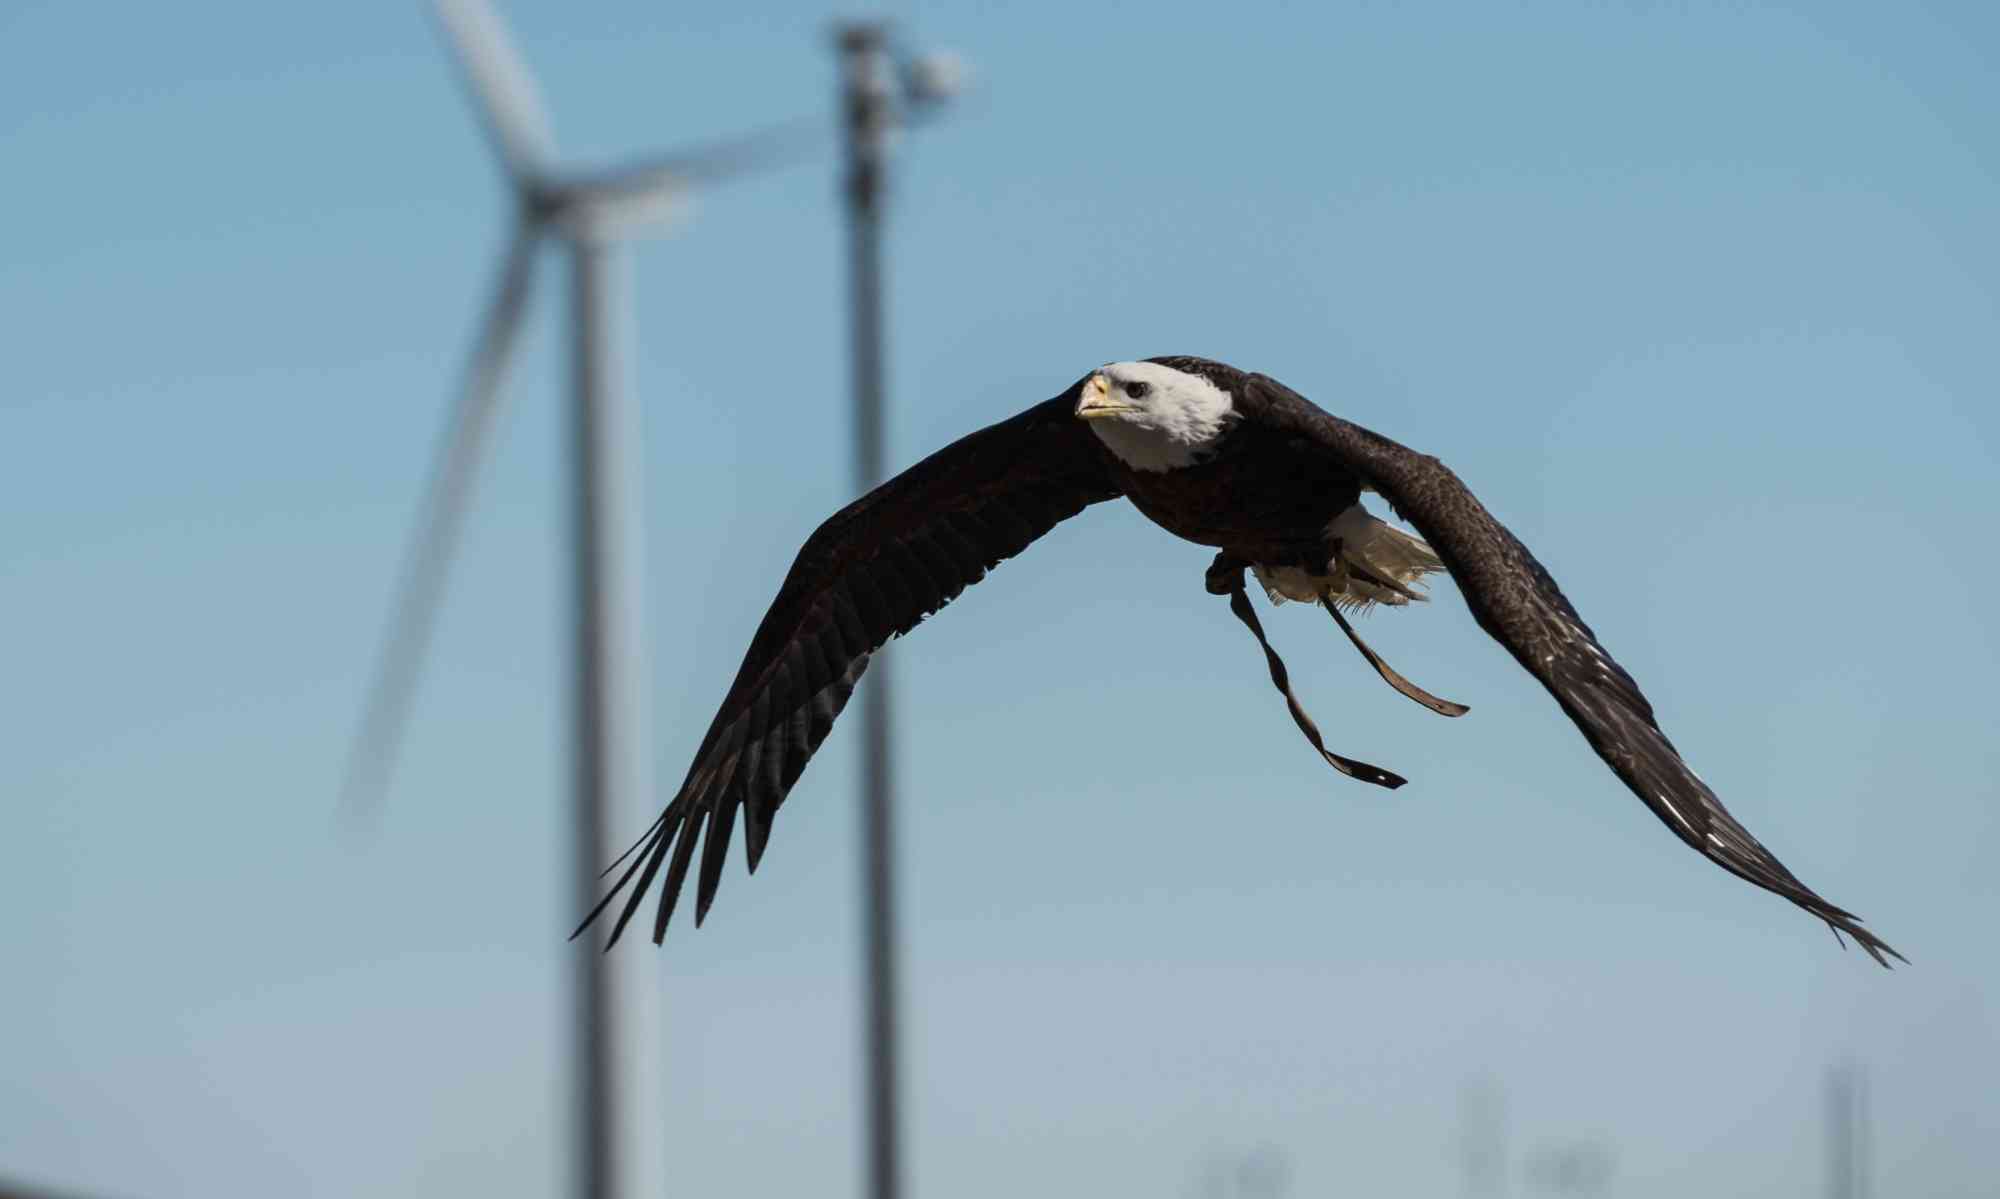 Bald eagle with a wind turbine